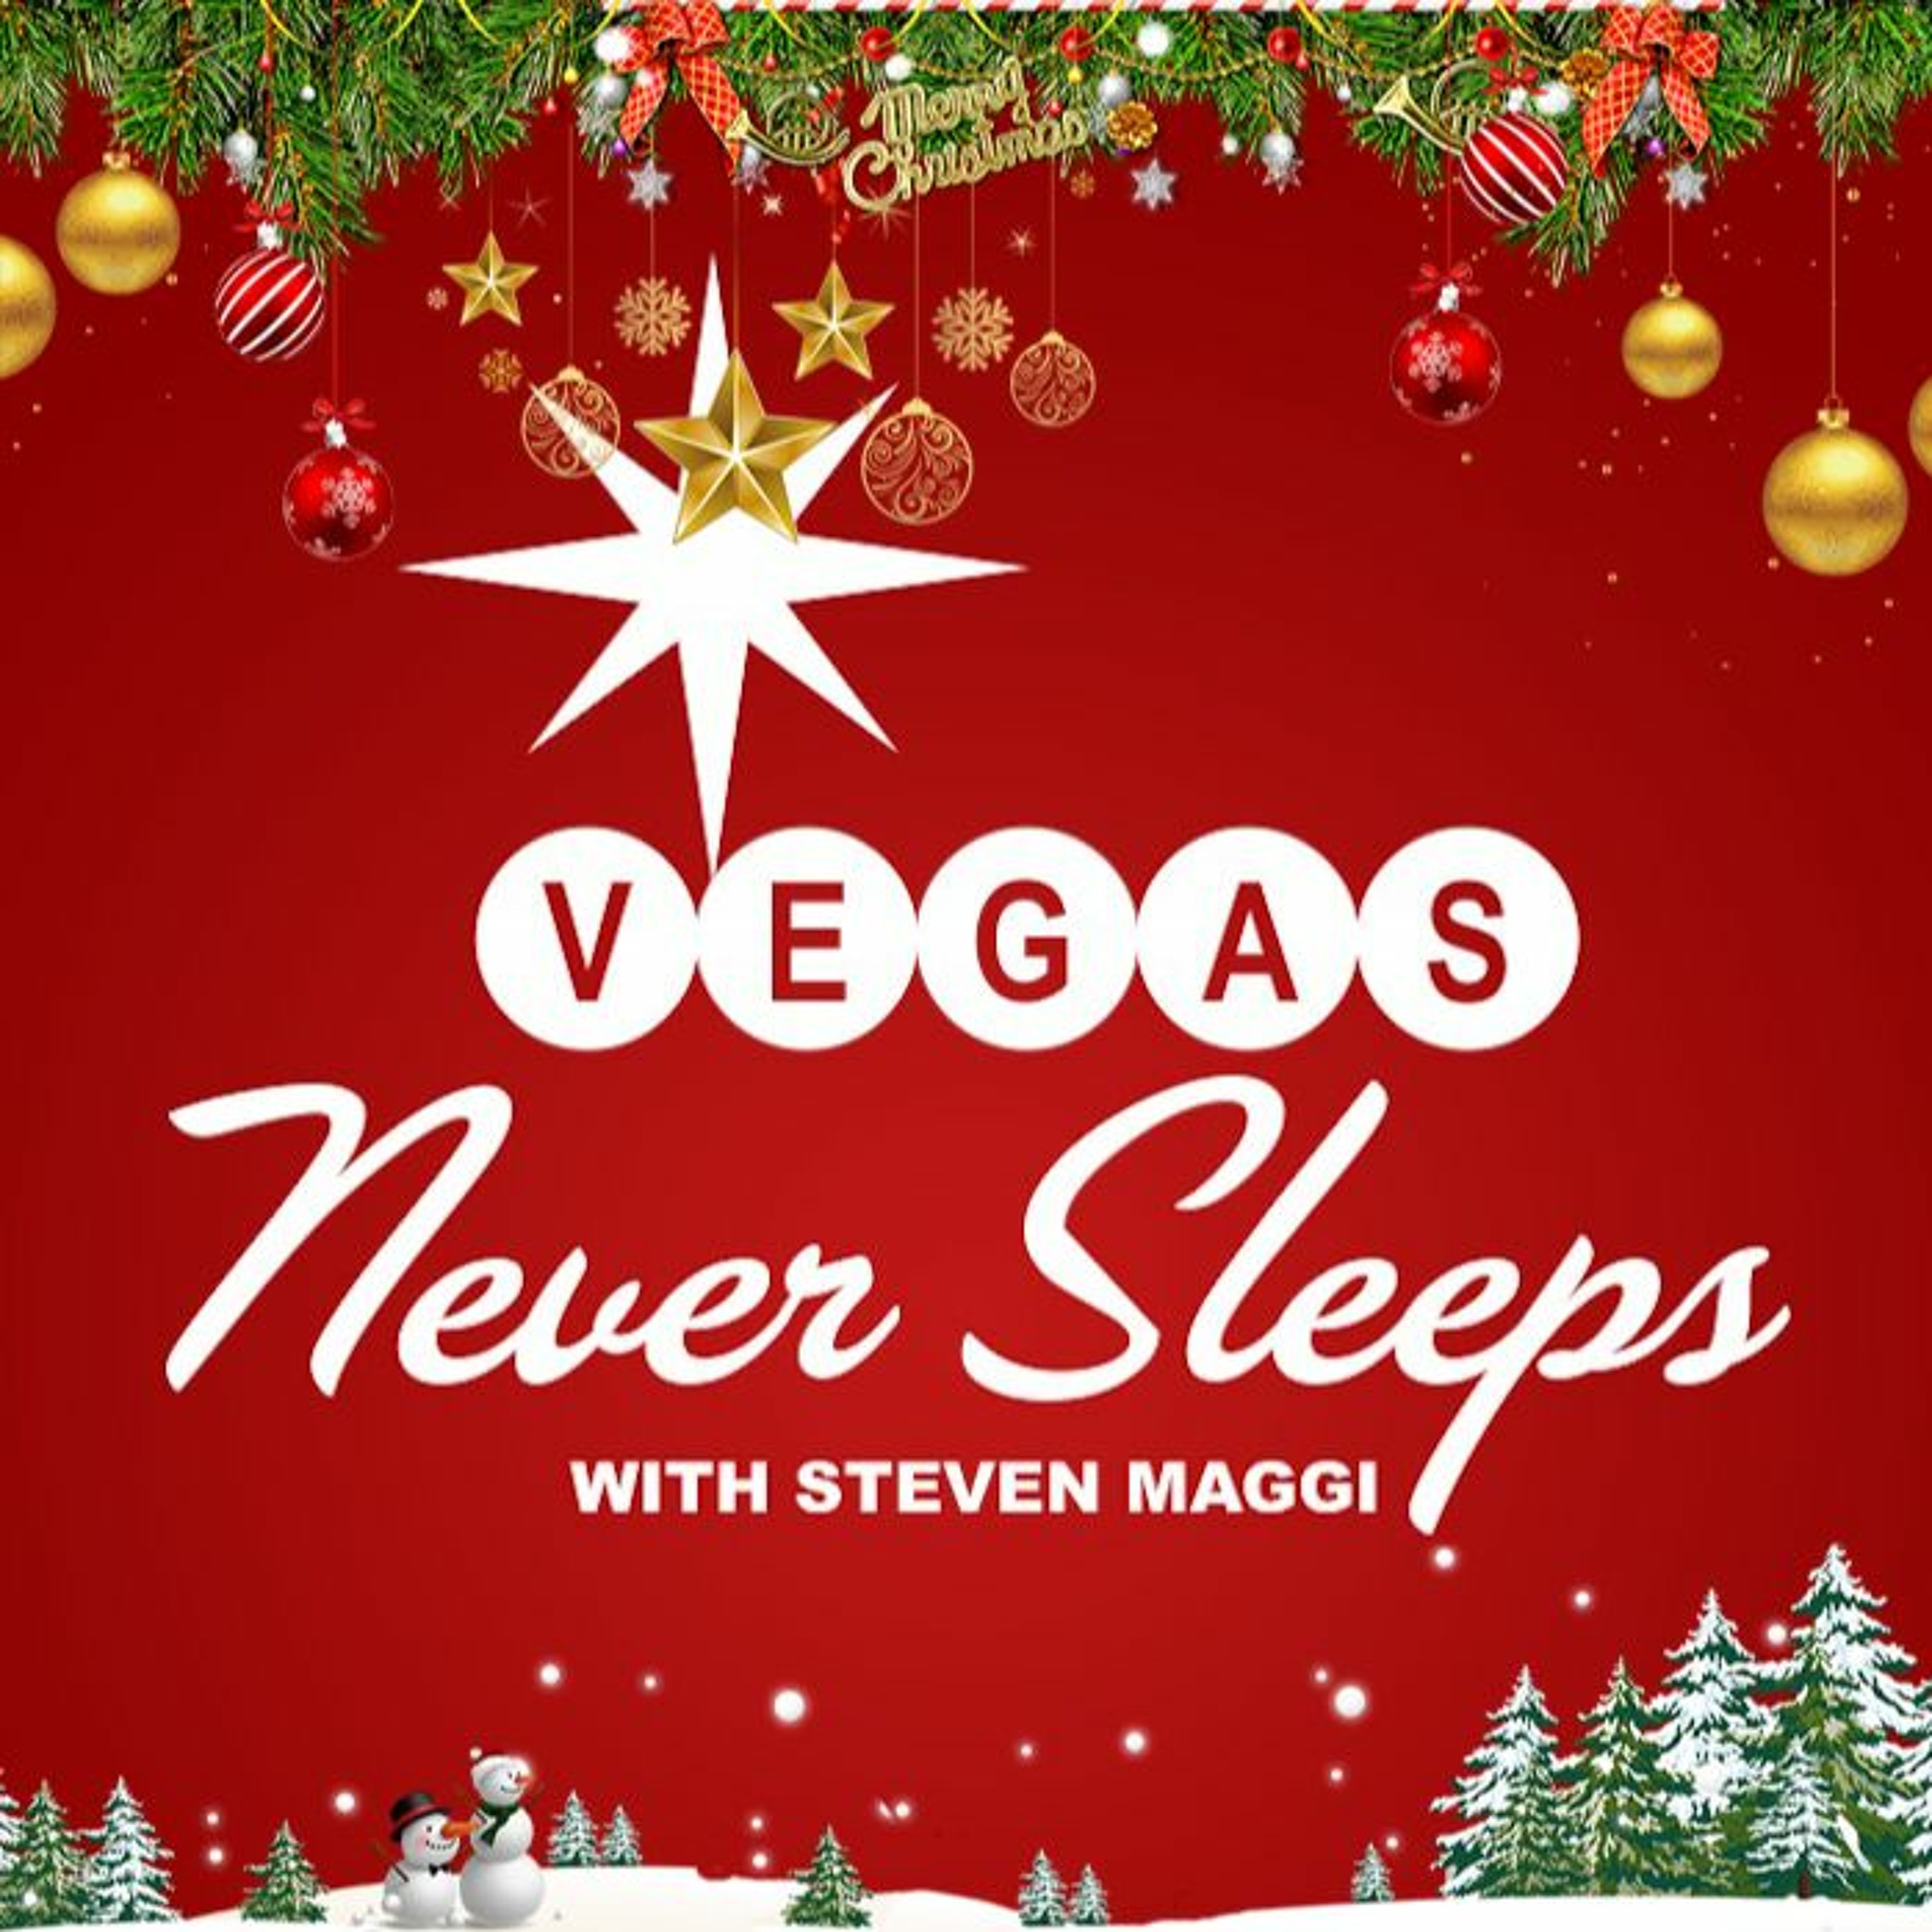 From December 24, 2022 - ”Christmas In Las Vegas”